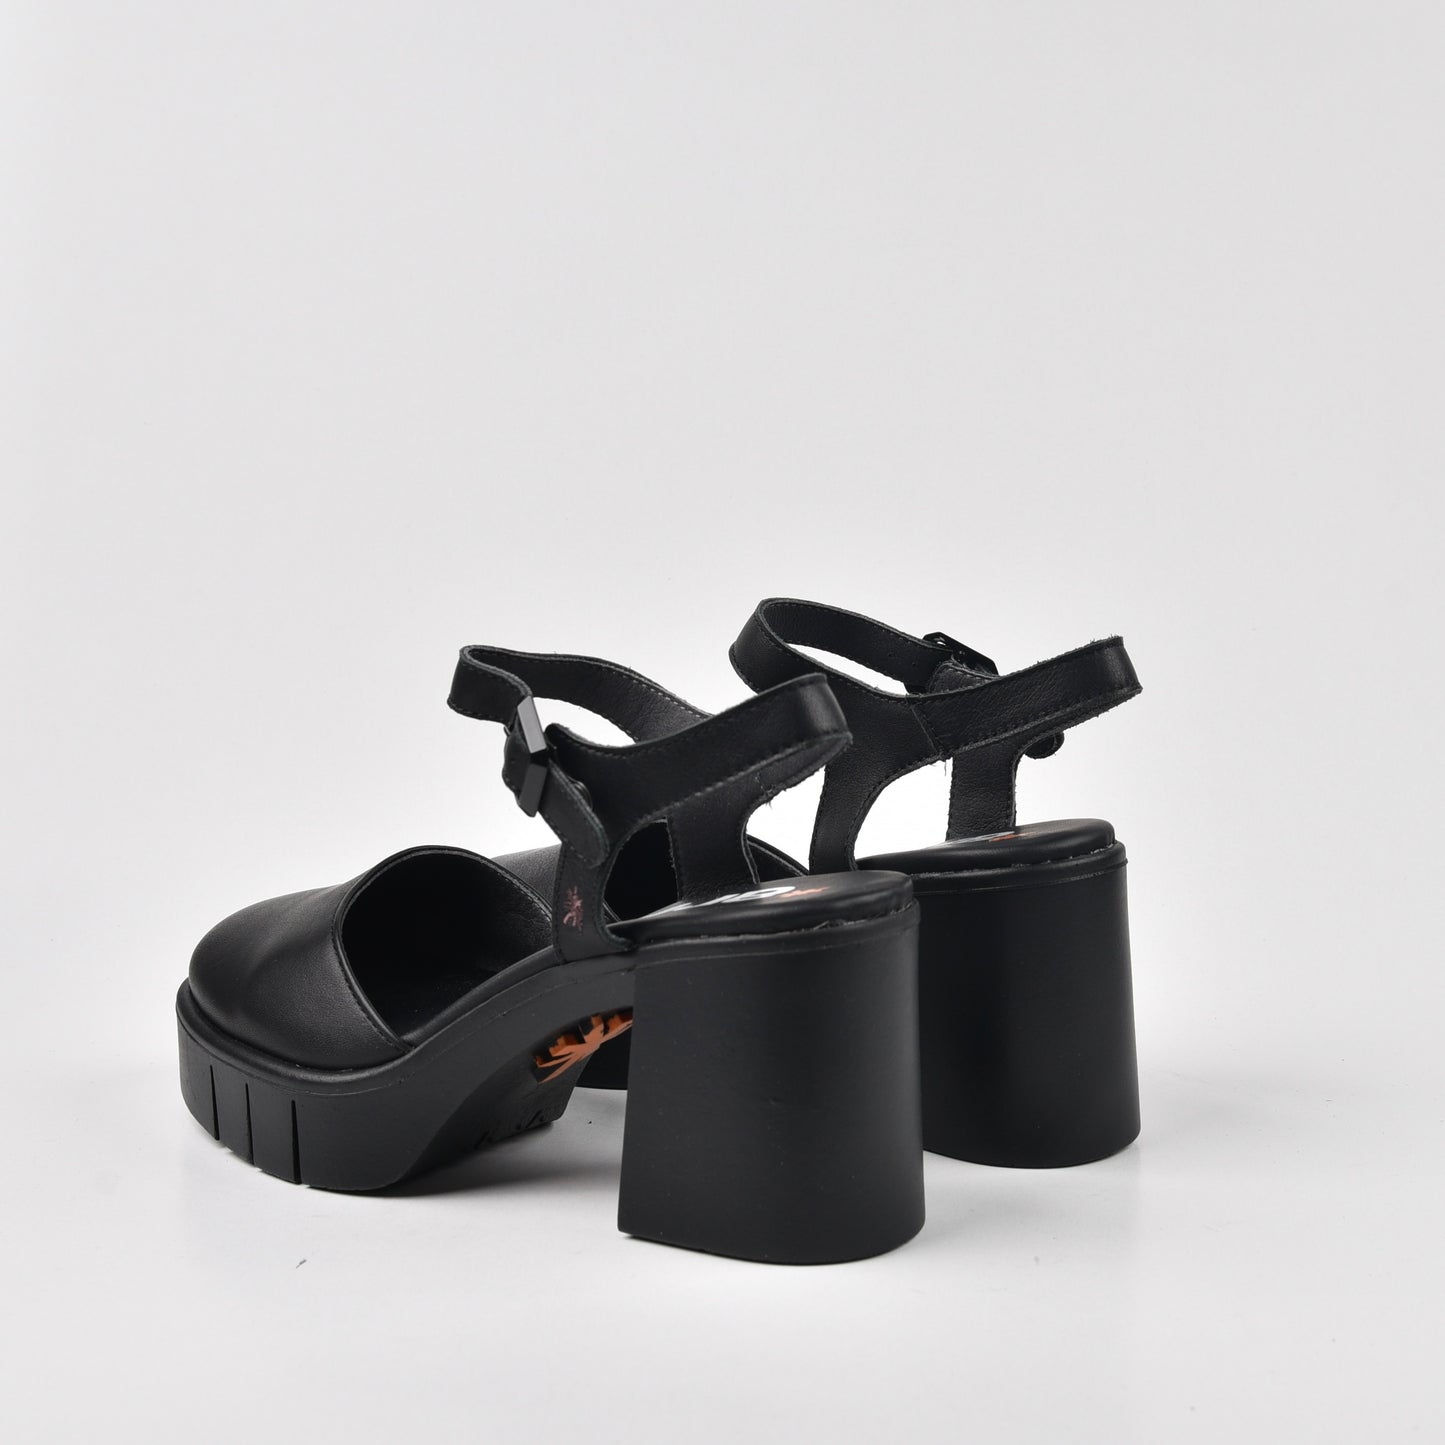 Art Spanish Medium-Heel Sandal for Women in Nappa Black.